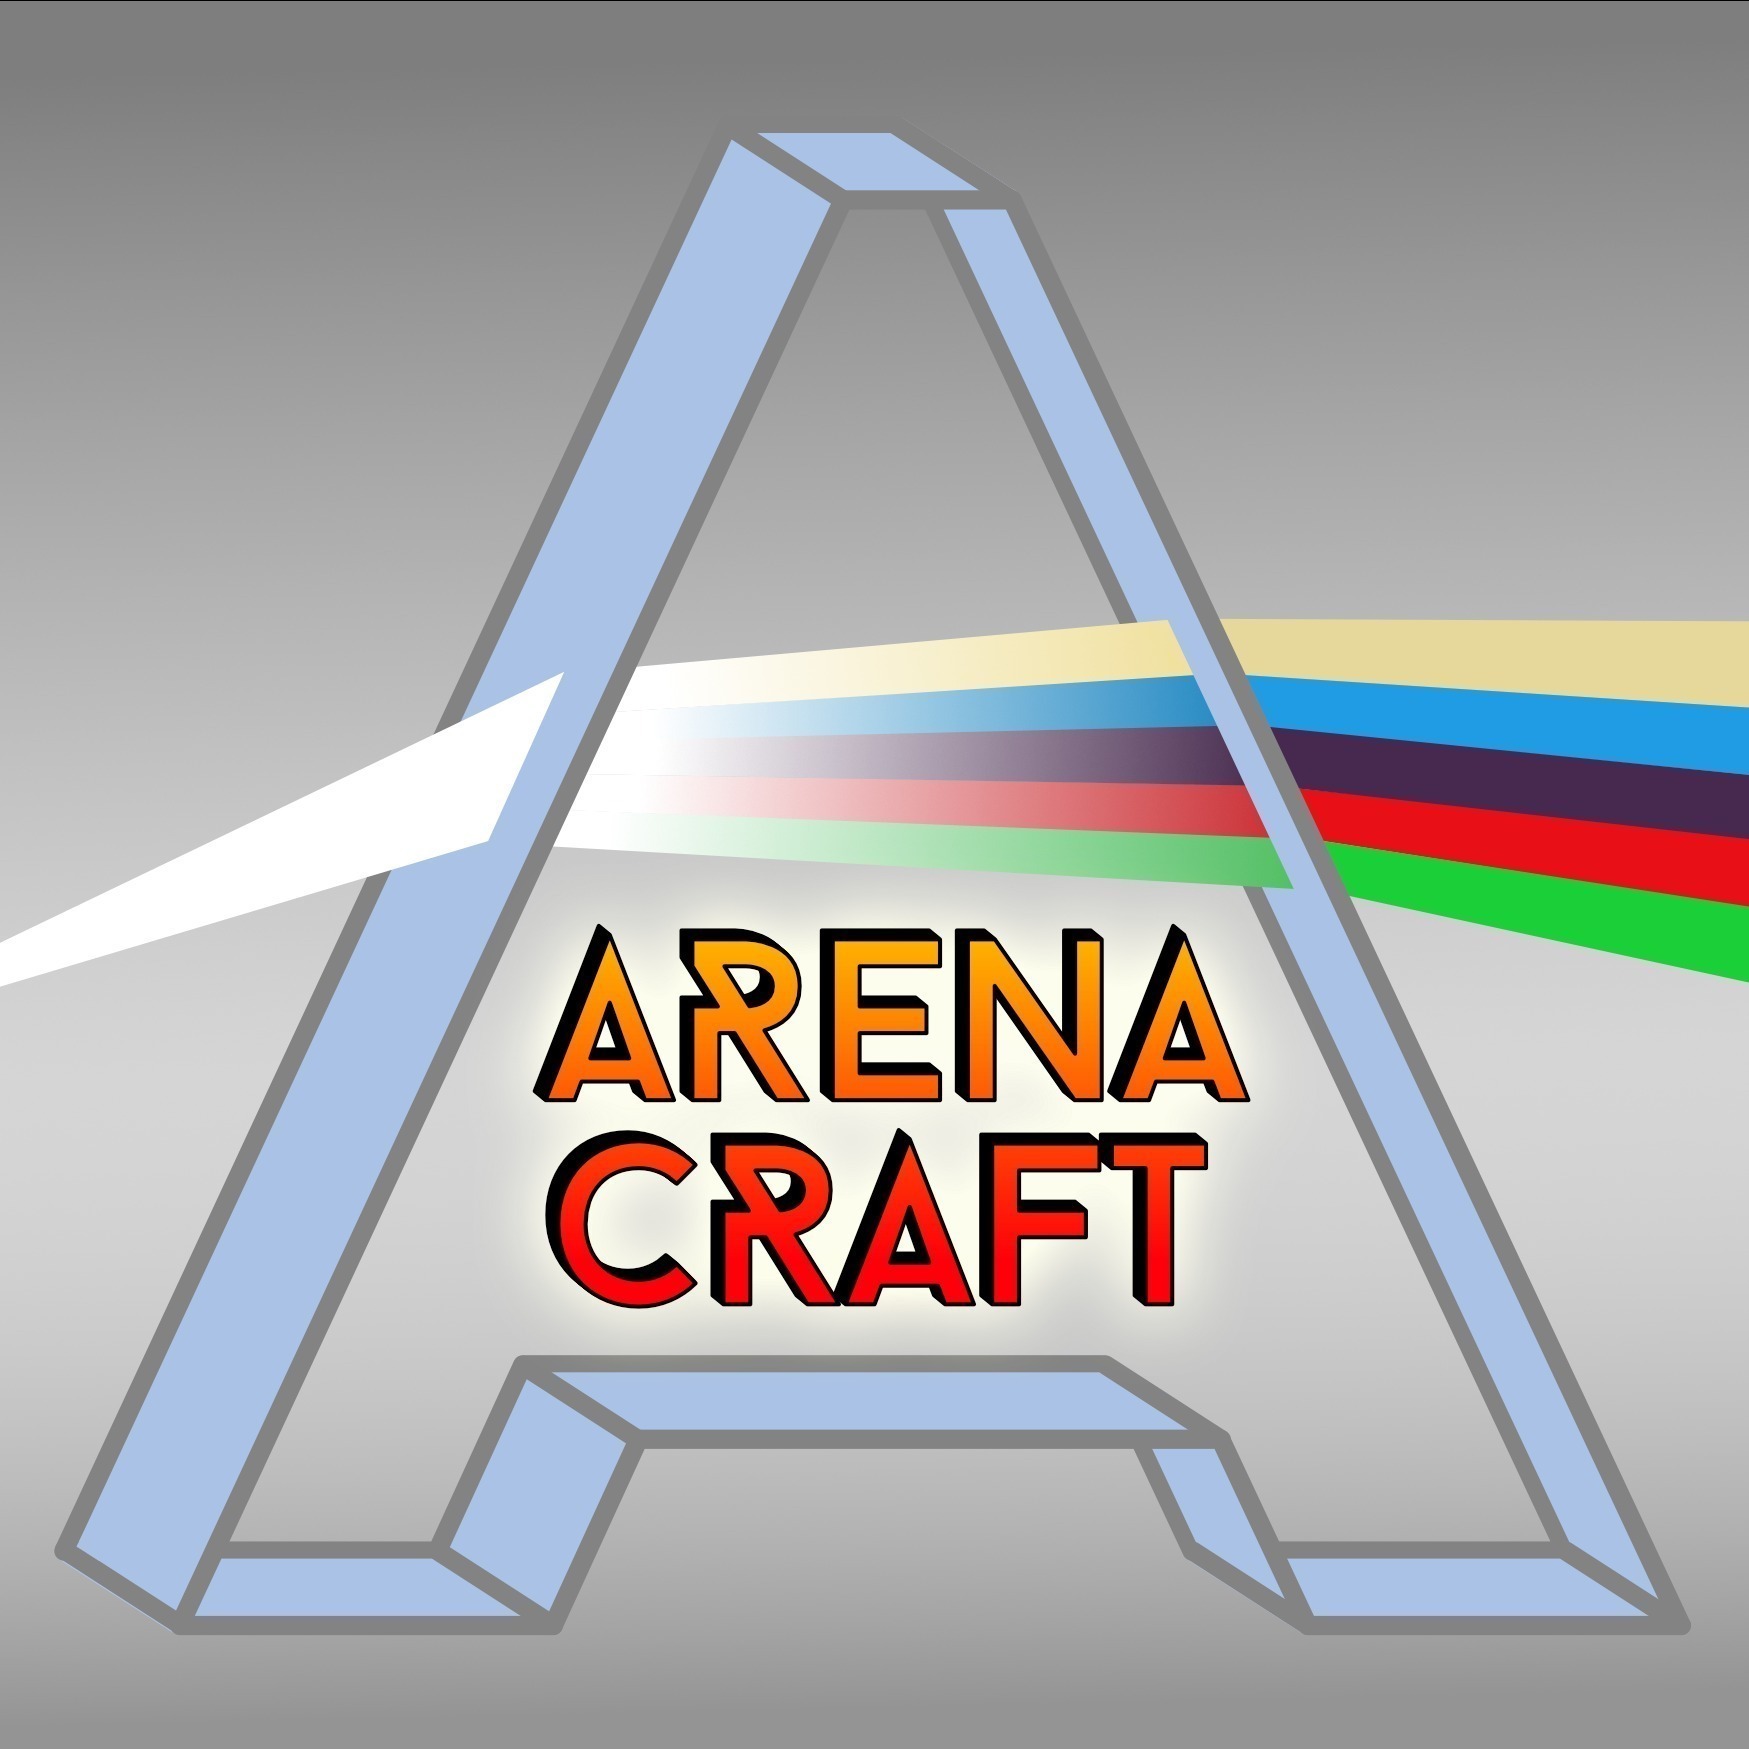 Arena Craft Podcast podcast show image